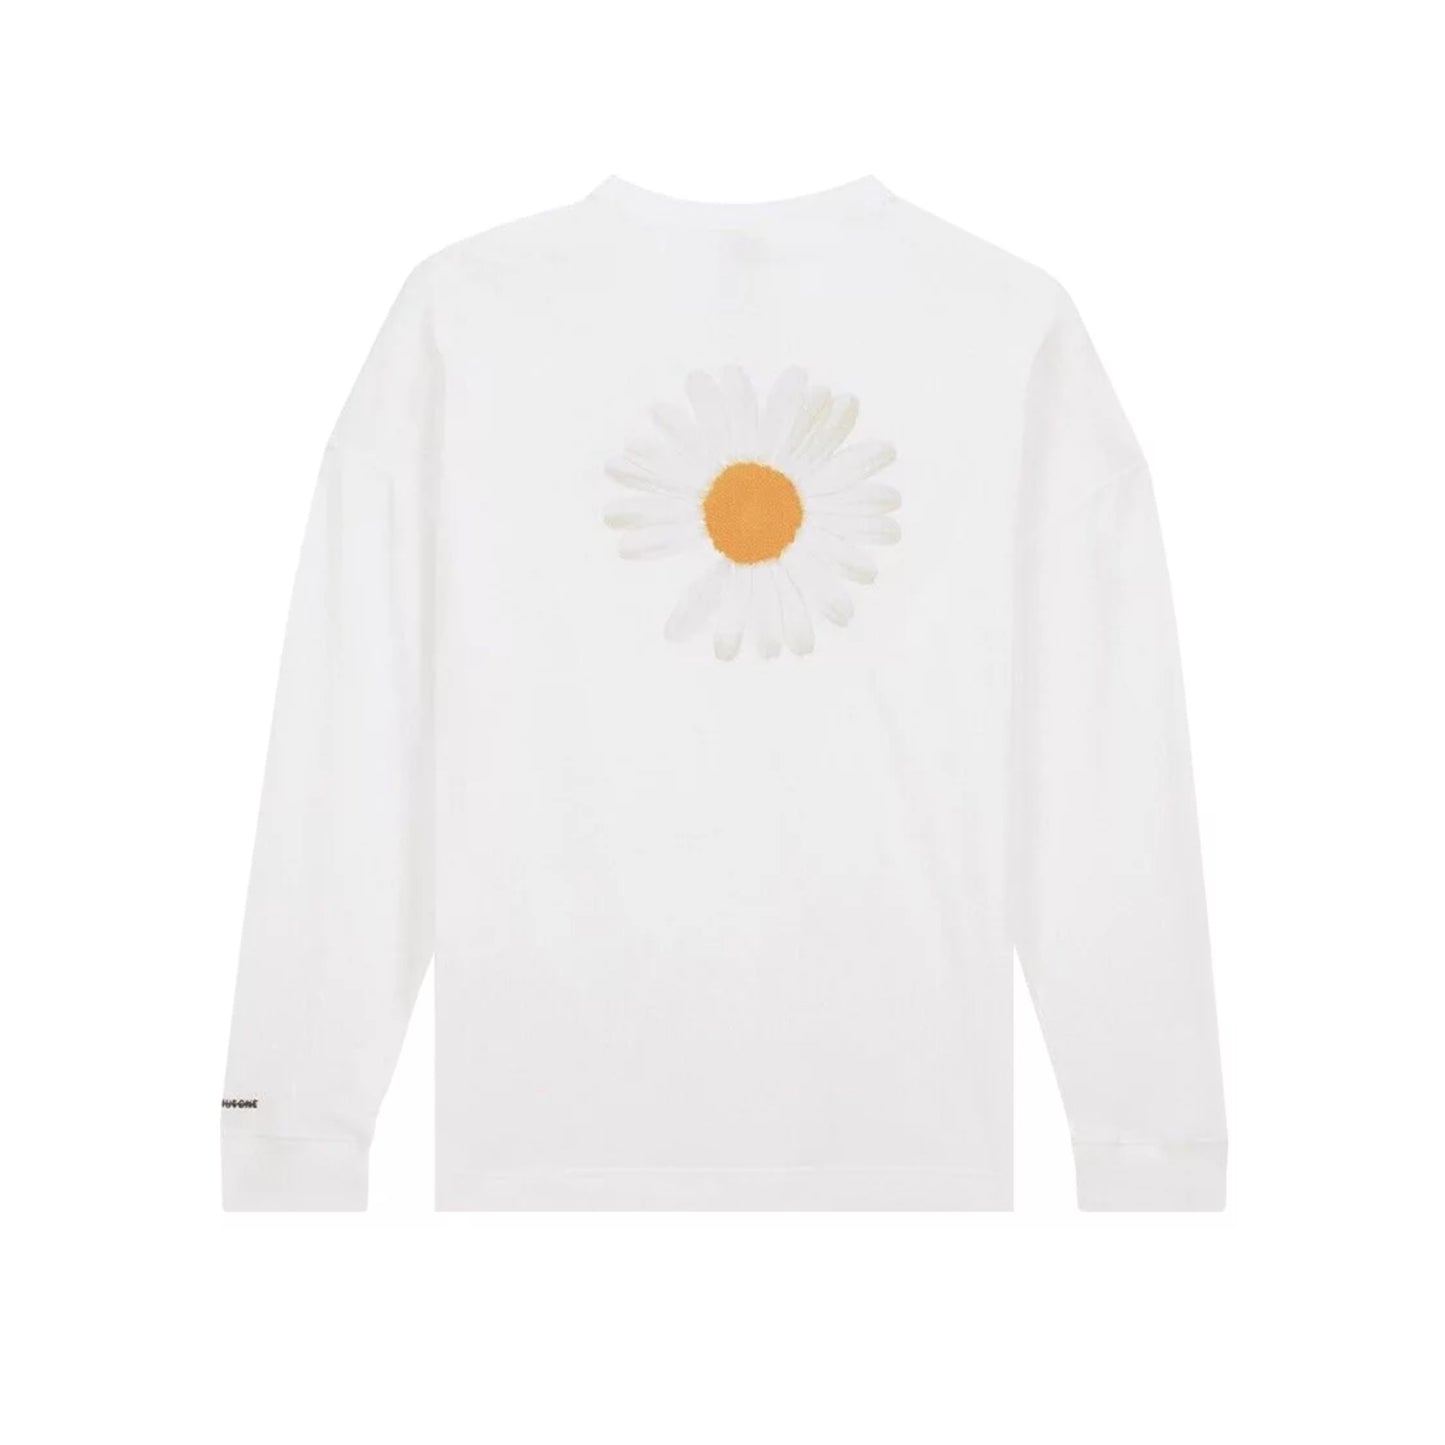 Nike x Peaceminusone G-Dragon Long Sleeve T-Shirt White